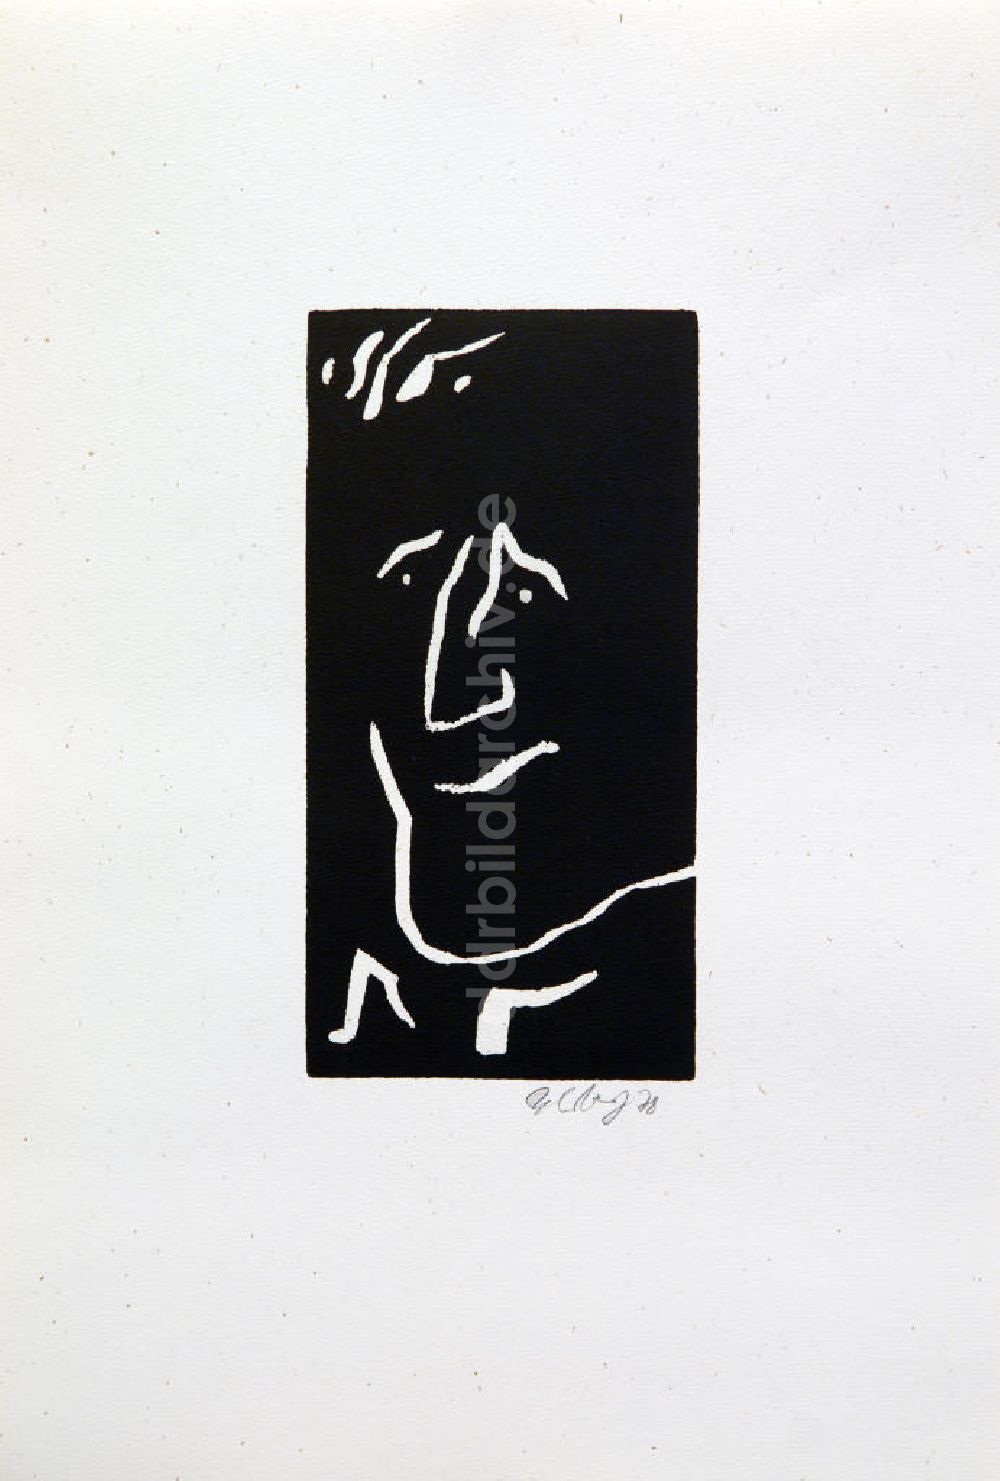 DDR-Bildarchiv: Berlin - Grafik von Herbert Sandberg über Bertolt Brecht 1978